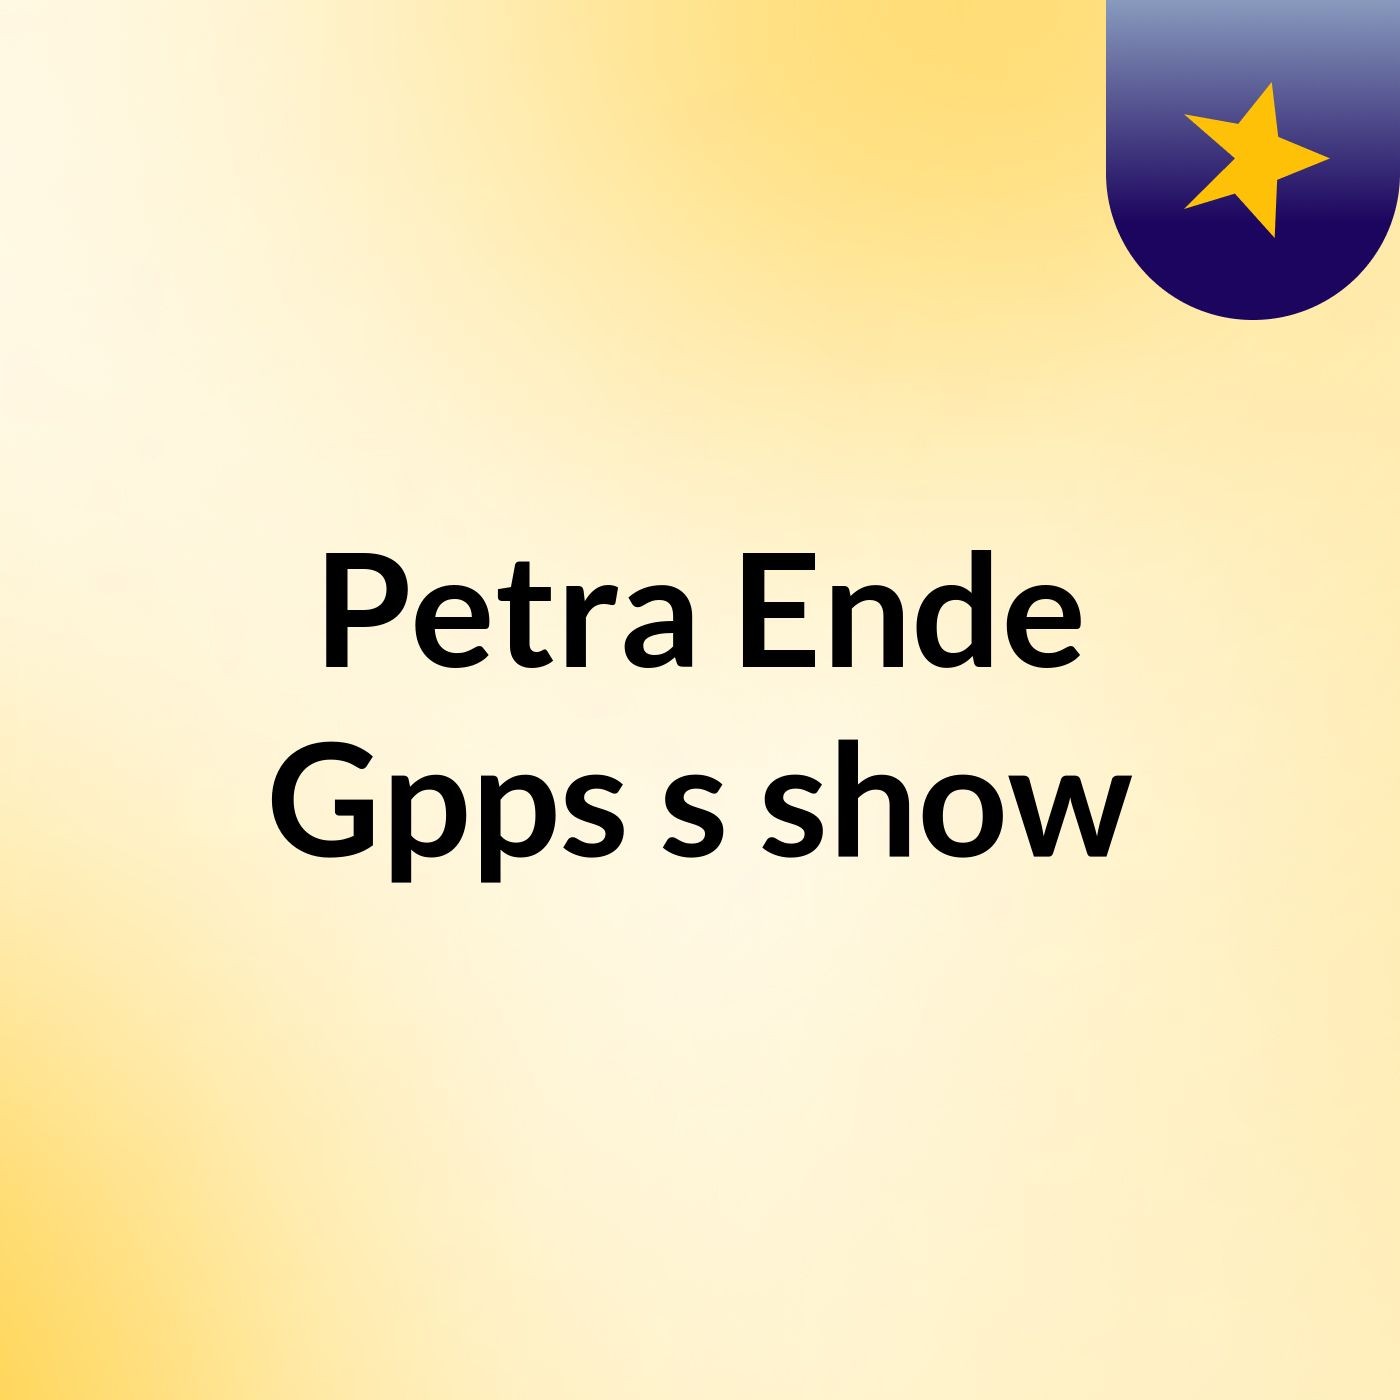 Episode 2 - Petra Ende Gpps's show